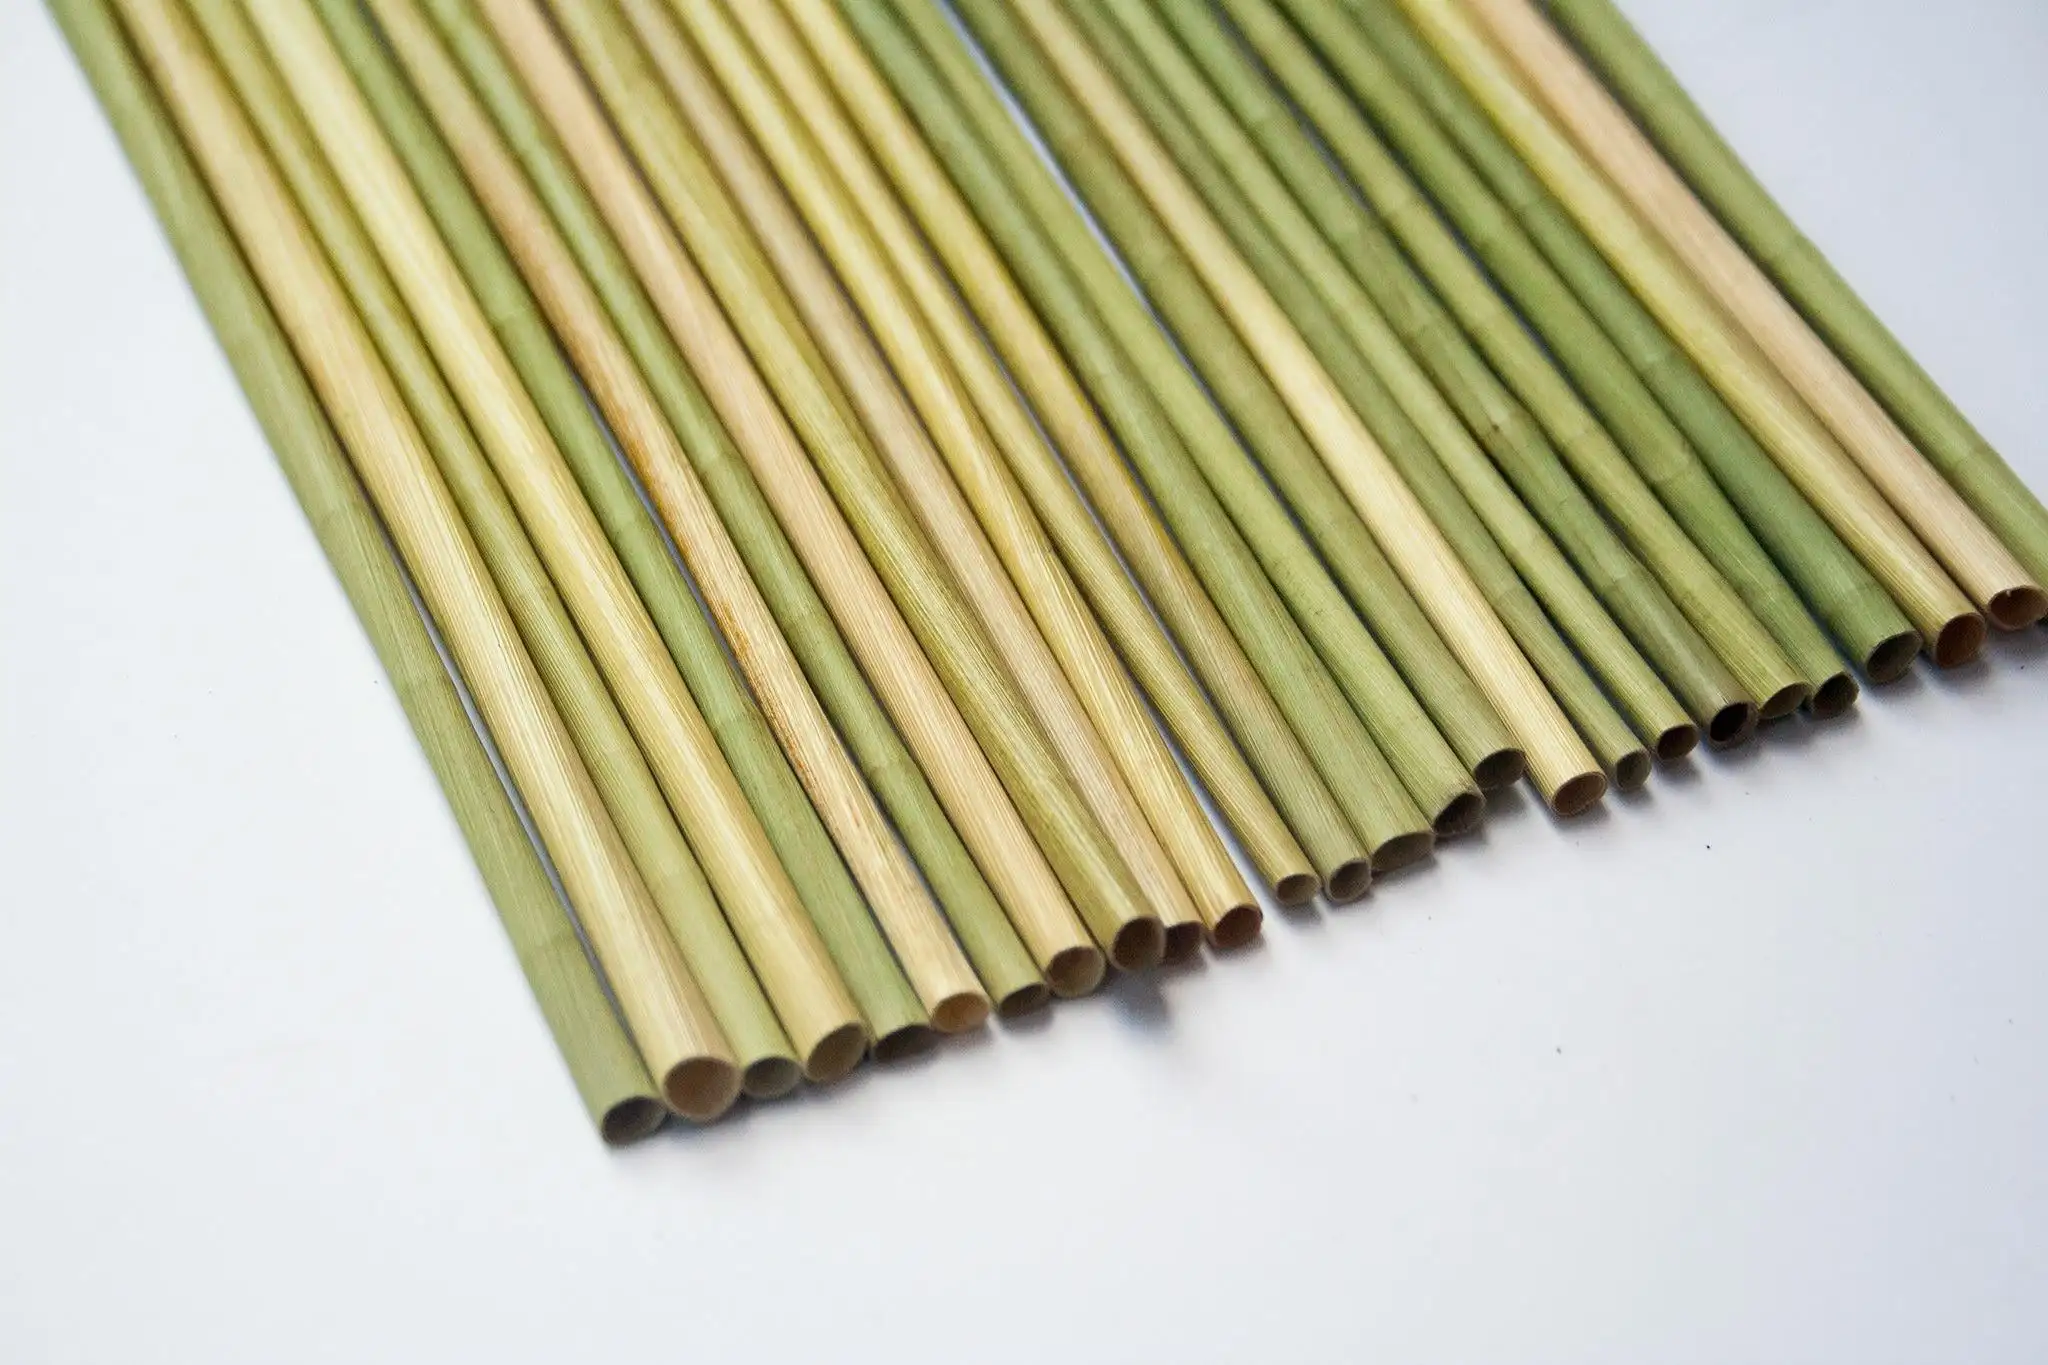 Eco-friendly grass straws from Vietnam